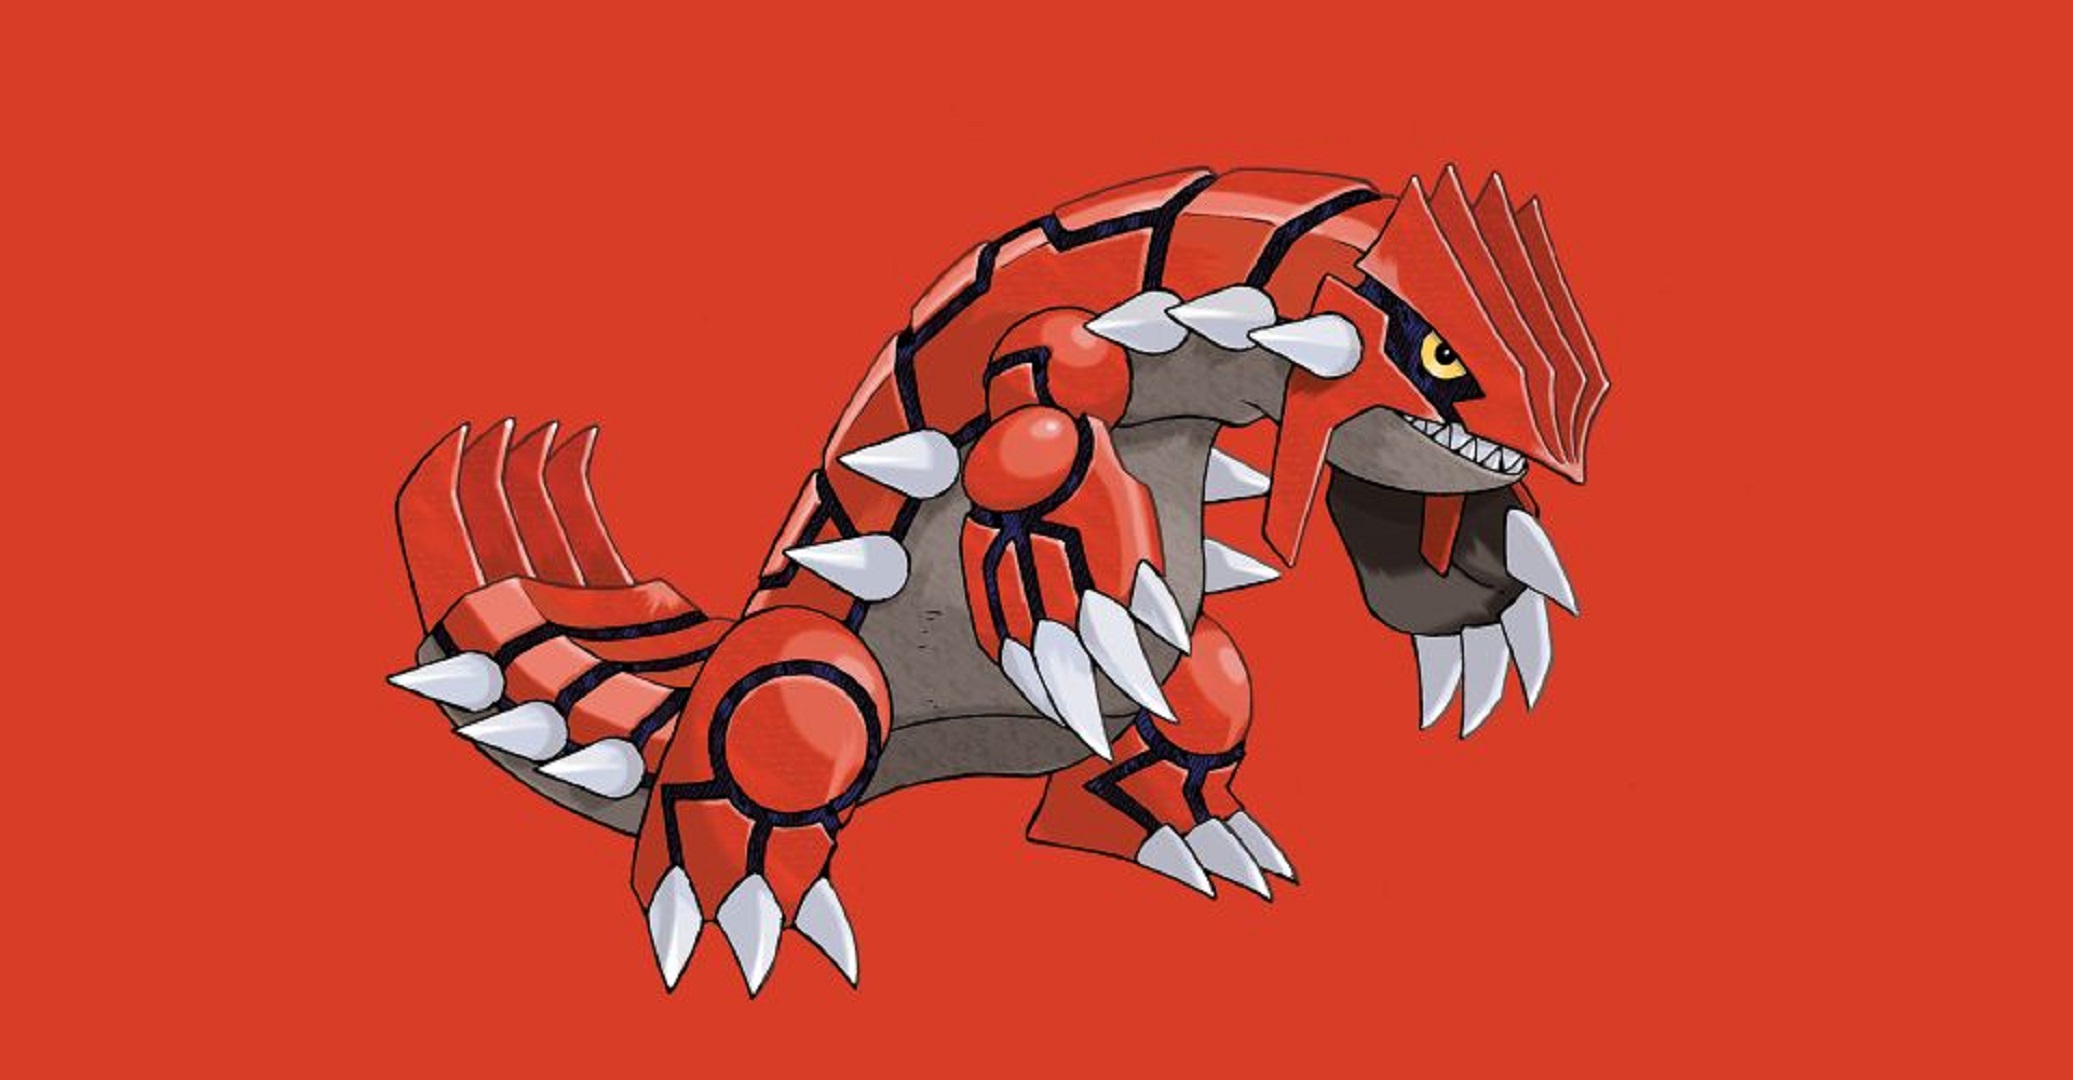 Jogada Excelente on X: Pokémon GO: Groudon, o Pokémon Continente